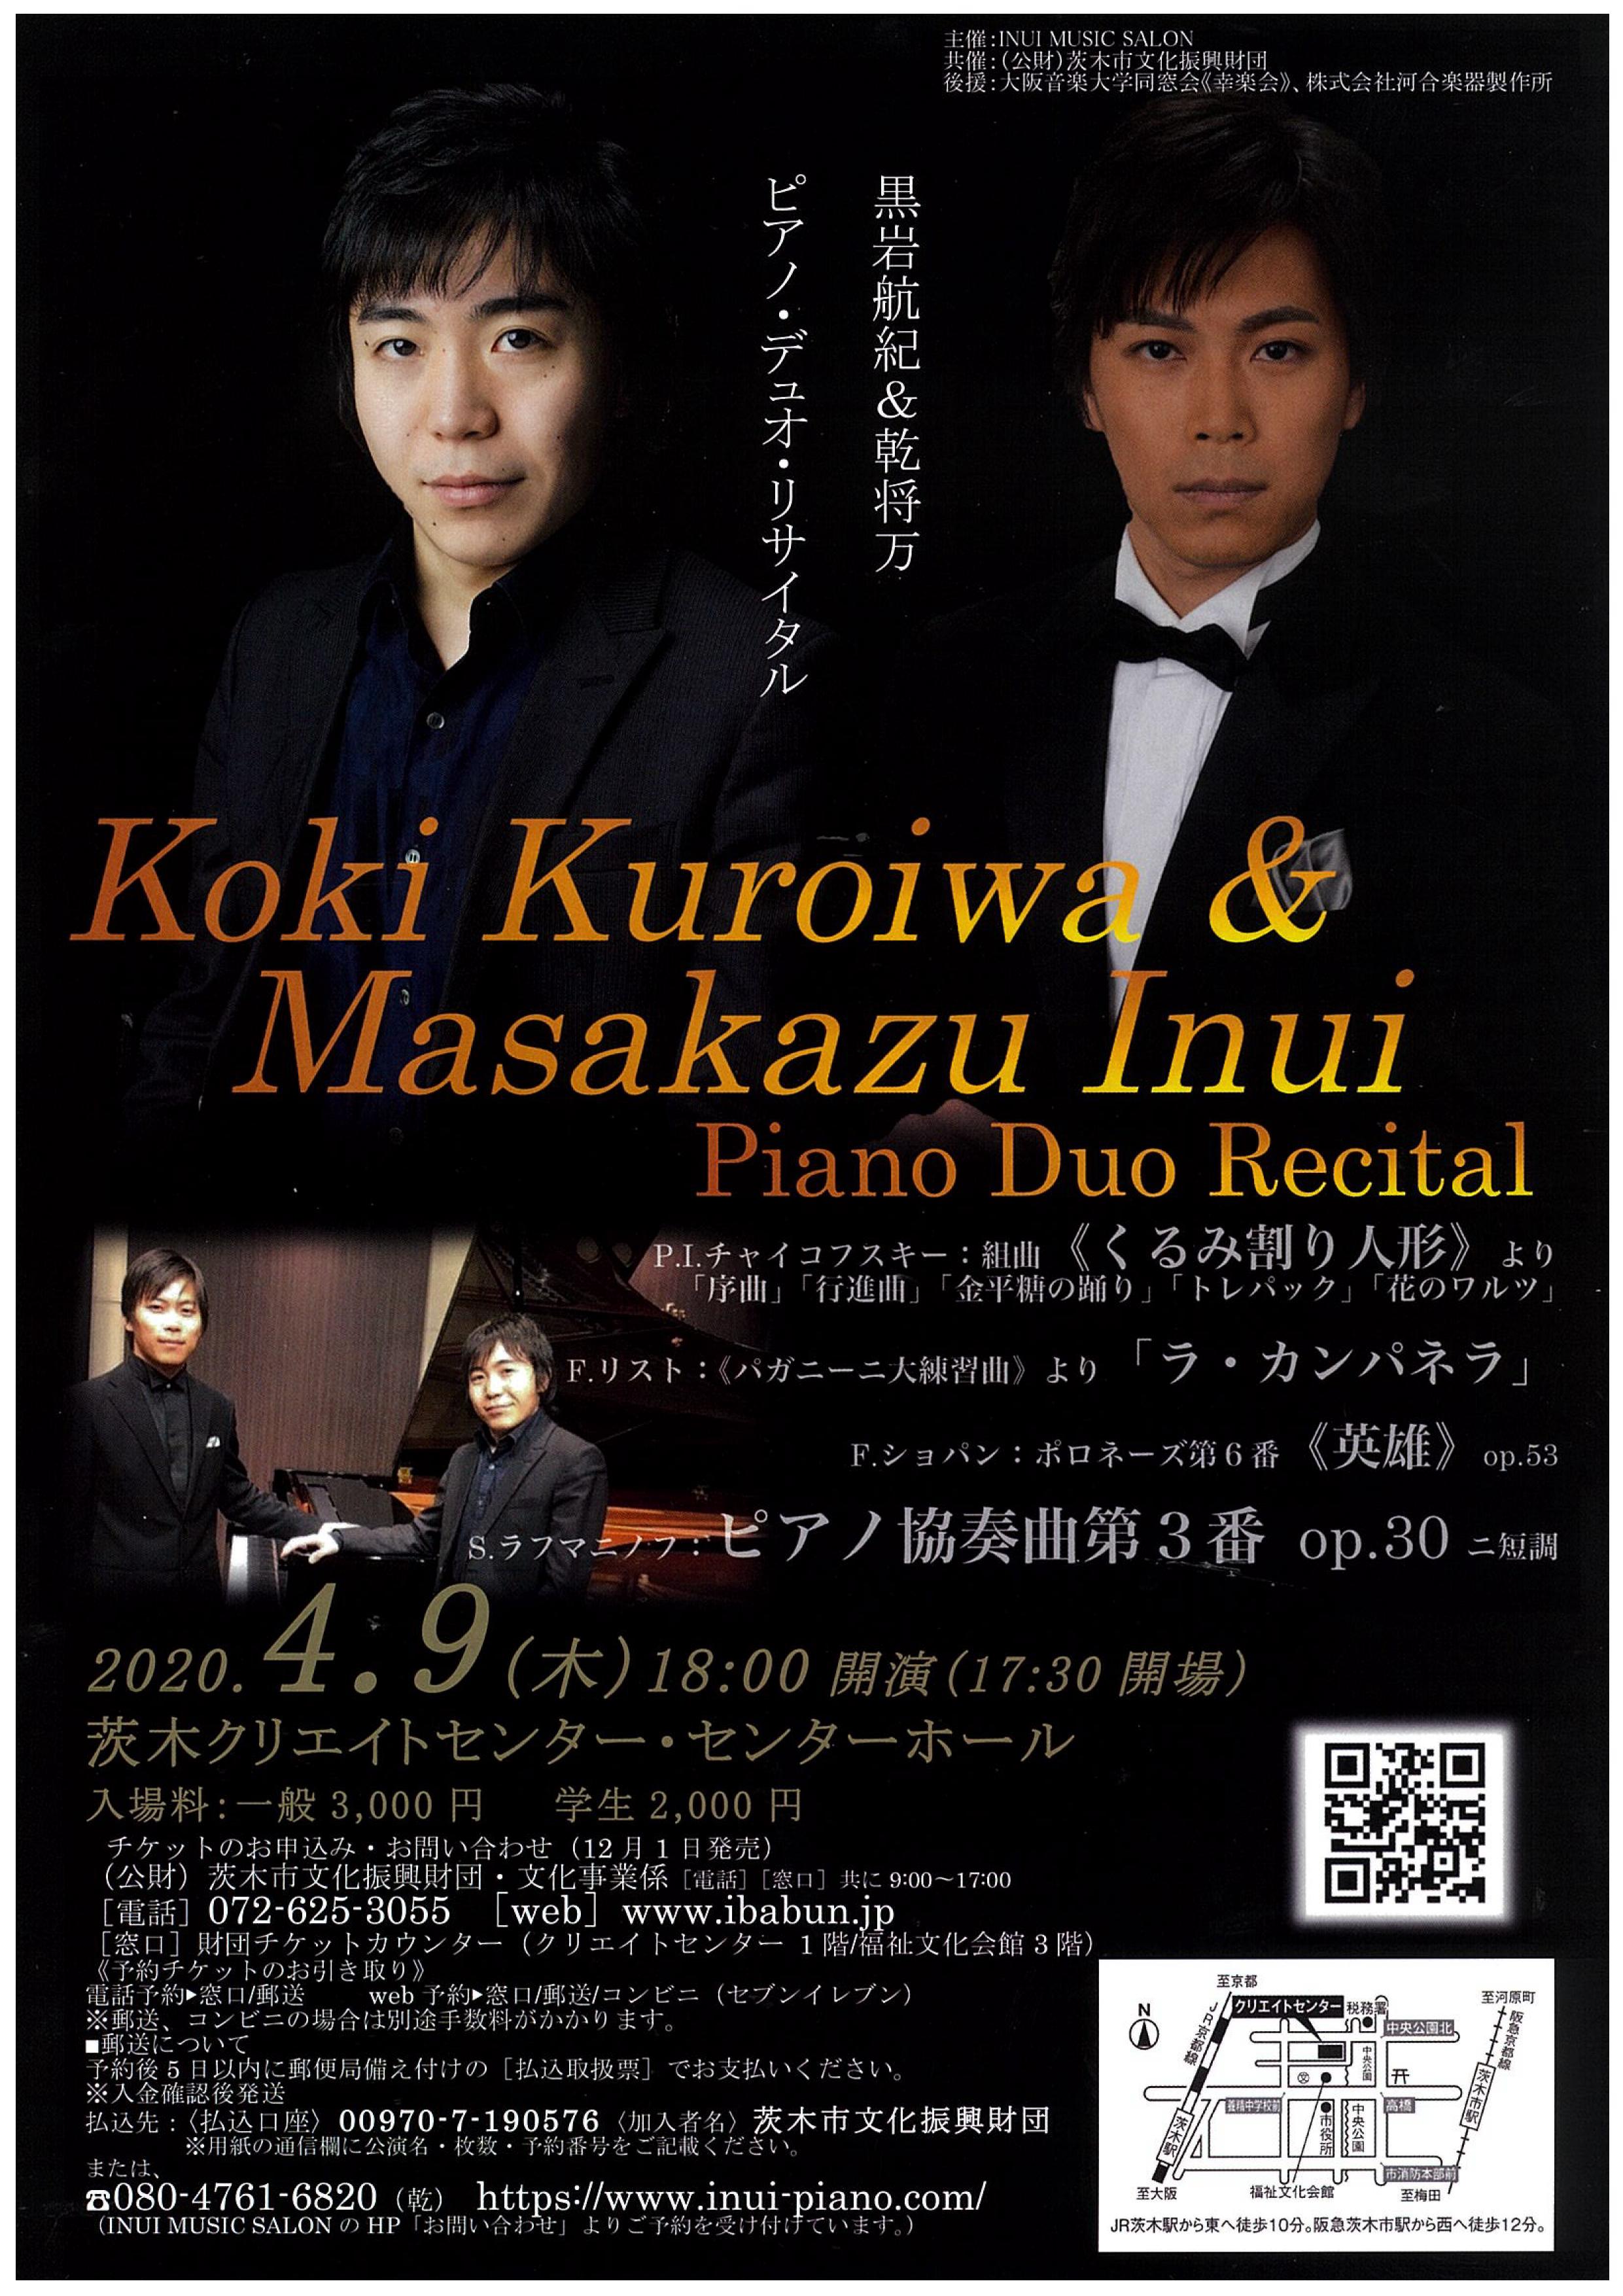 【再延期】Koki Kuroiwa & Masakazu Inui  Piano Duo Recital